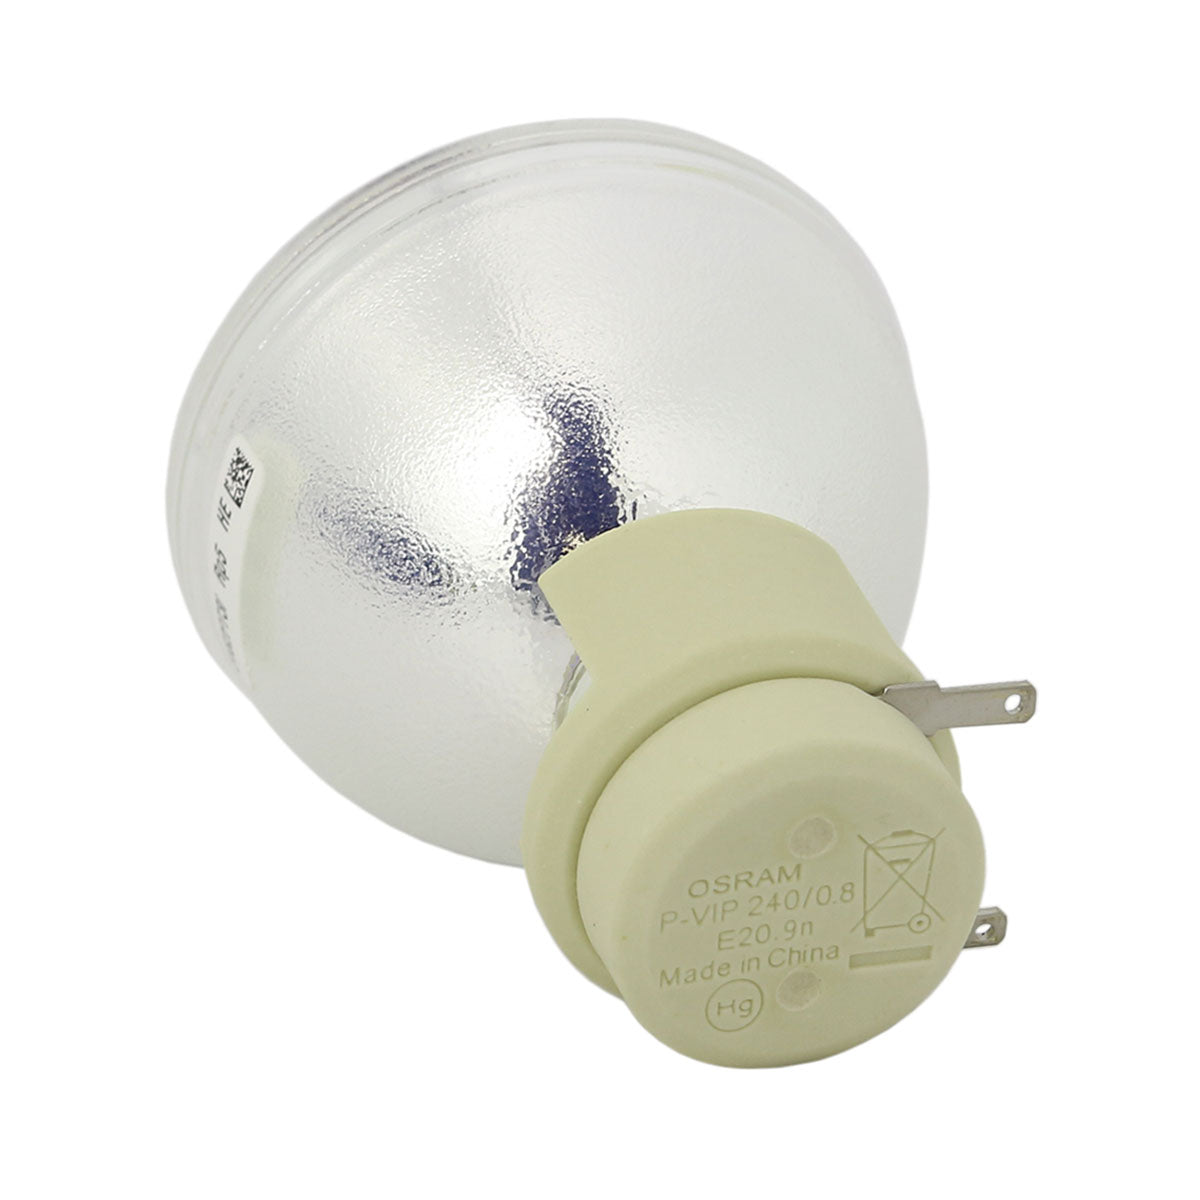 BenQ 5J.J9H05.001 Osram Projector Bare Lamp